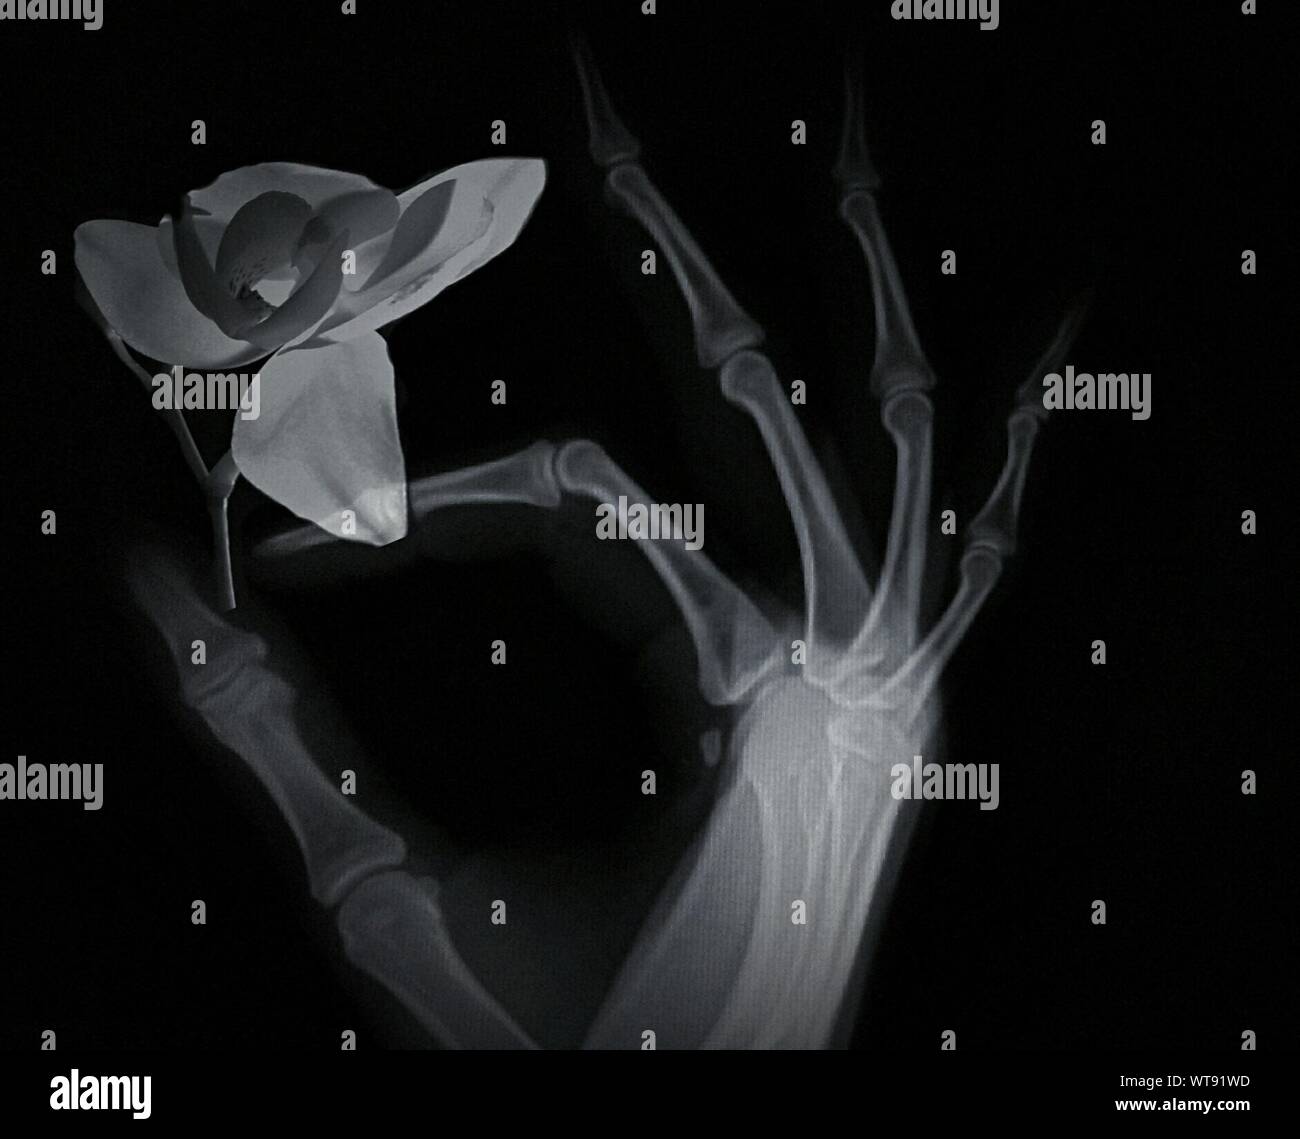 X-ray Image Of Human Hand Holding Single Flower Stock Photo